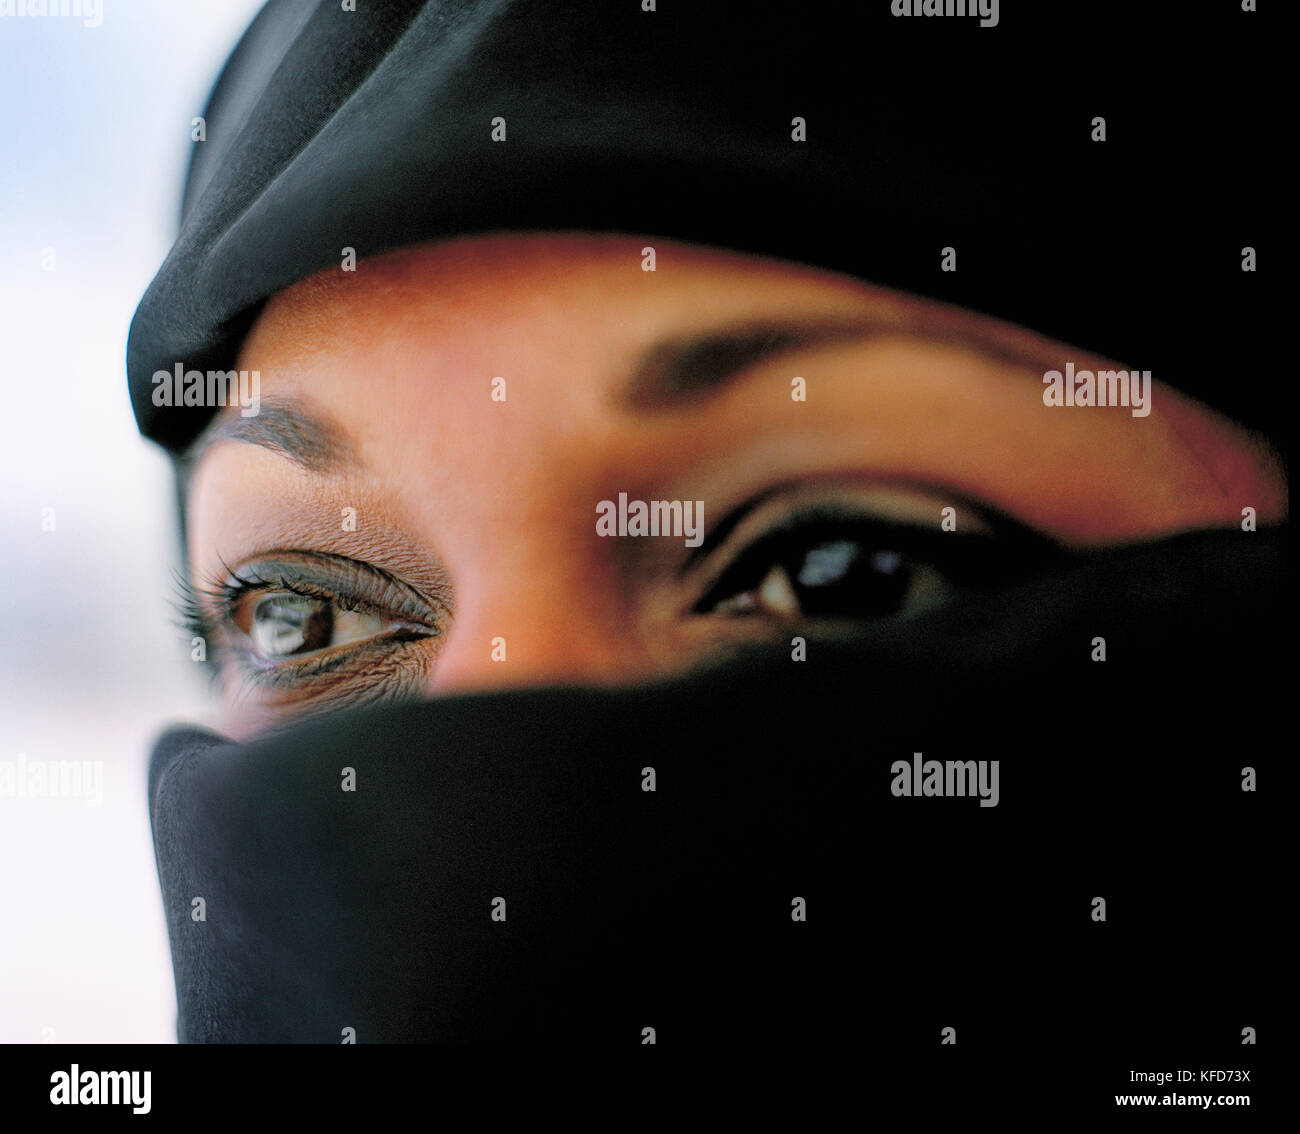 SAUDI ARABIA, Riyadh, close-up of young woman wearing hijab Stock Photo